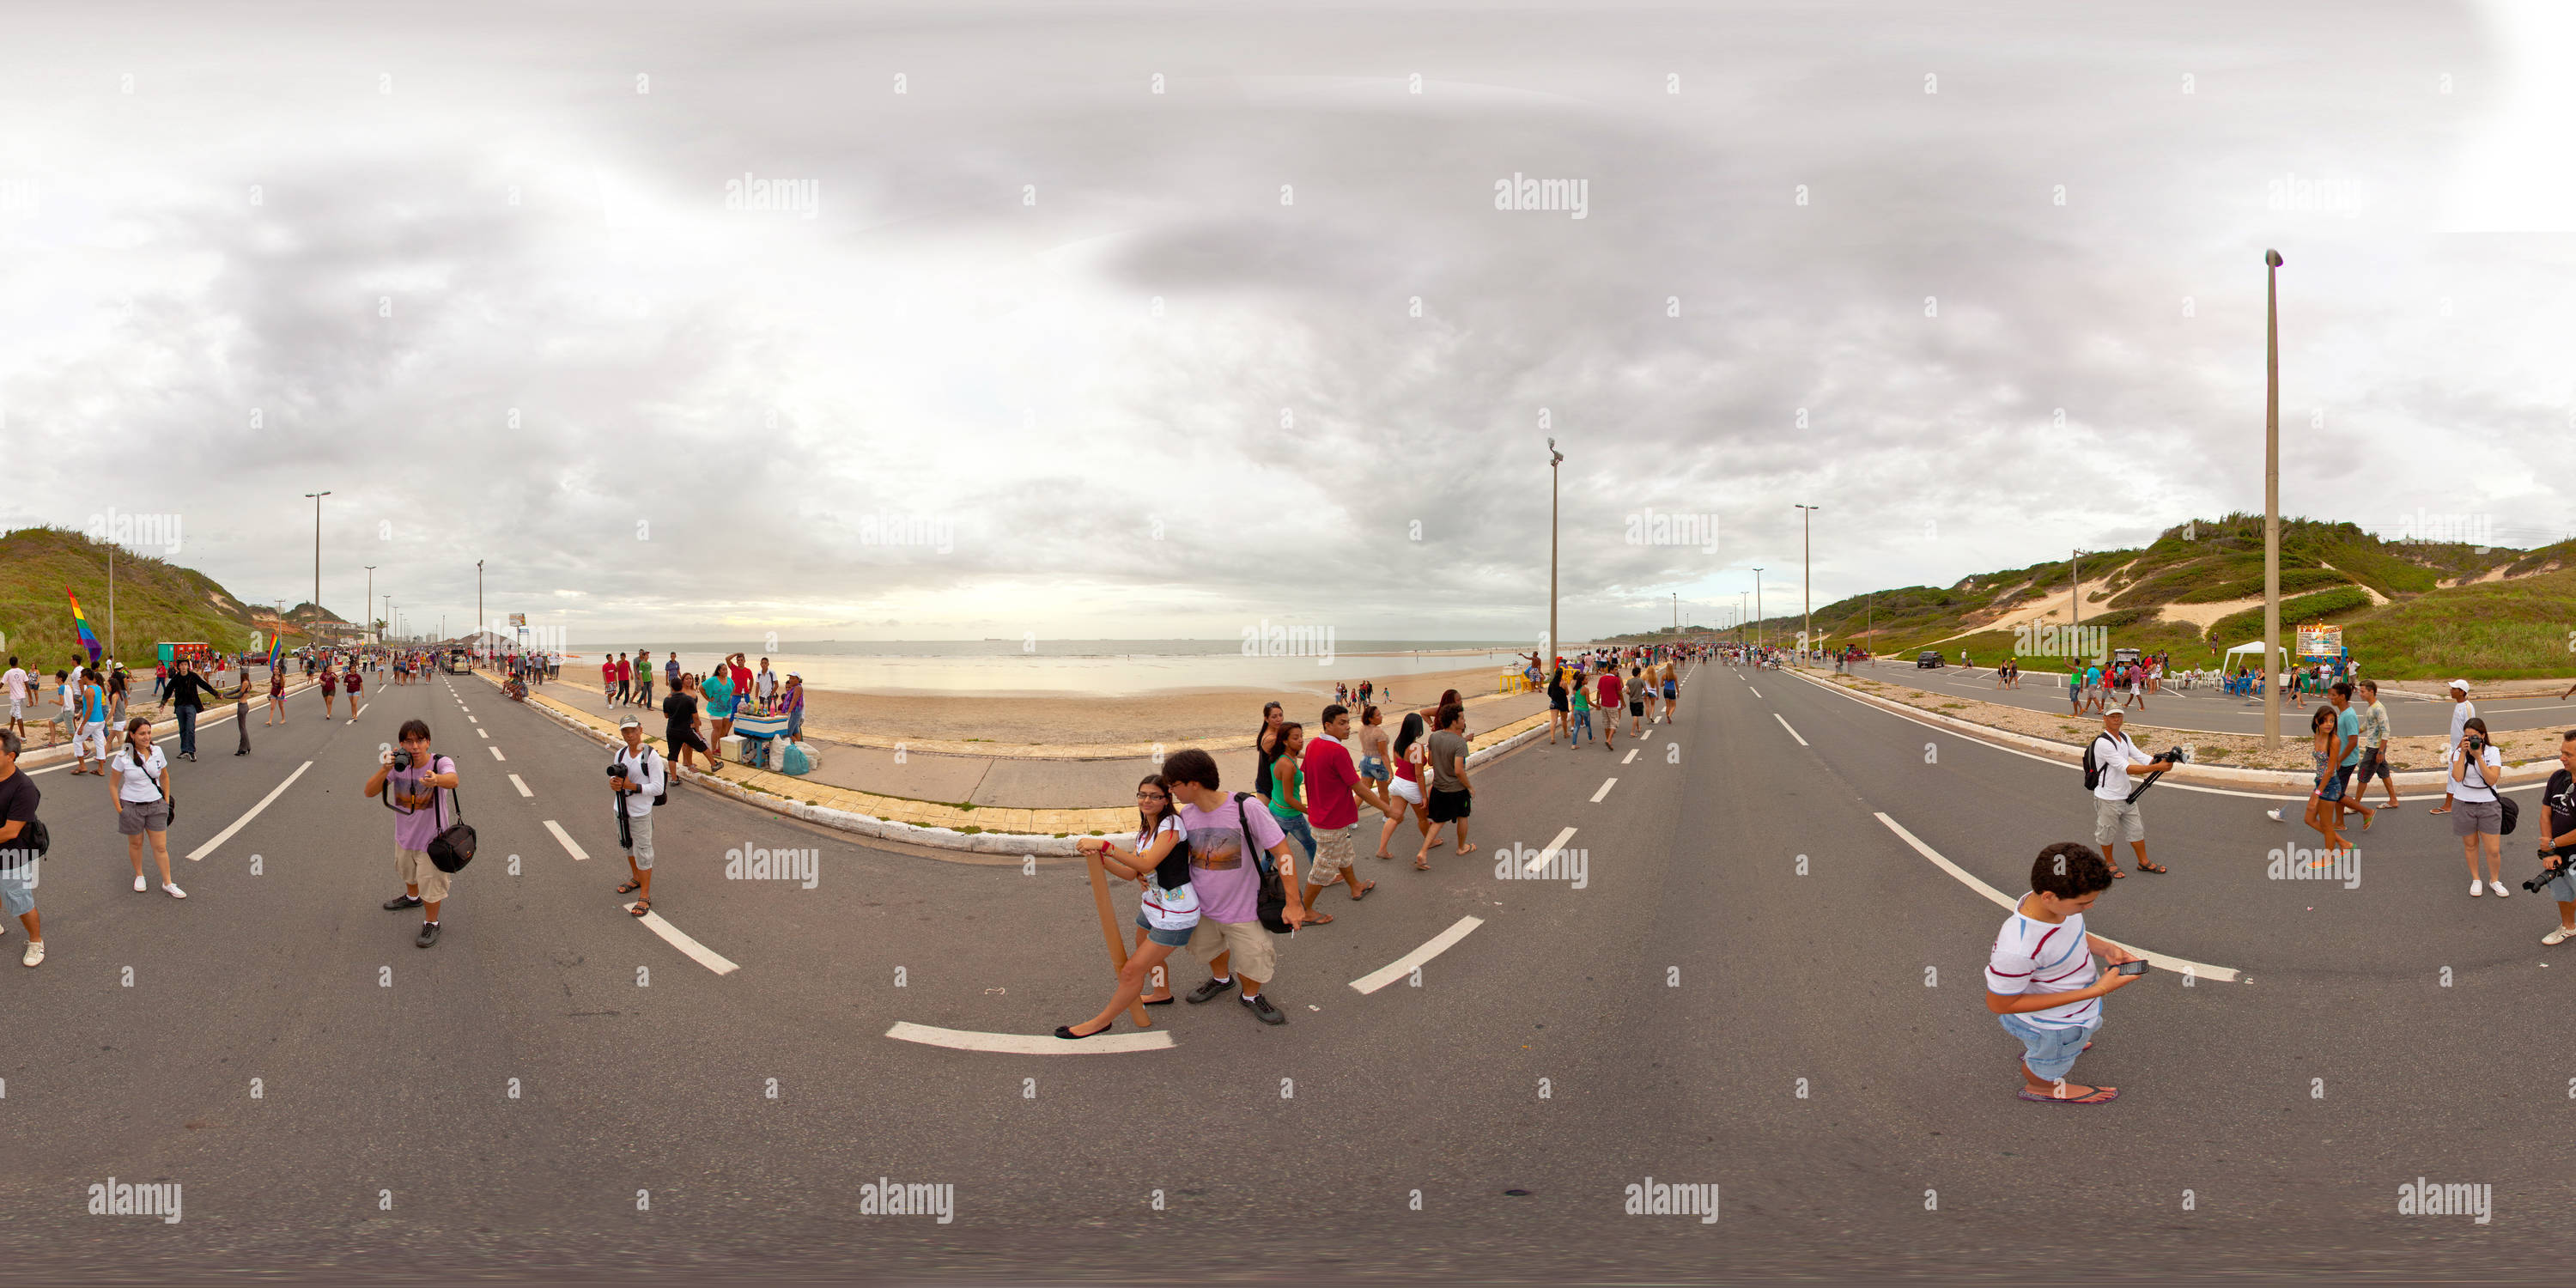 360 degree panoramic view of Img 2614 Panorama Cube Equi 1 Enviar 360cities